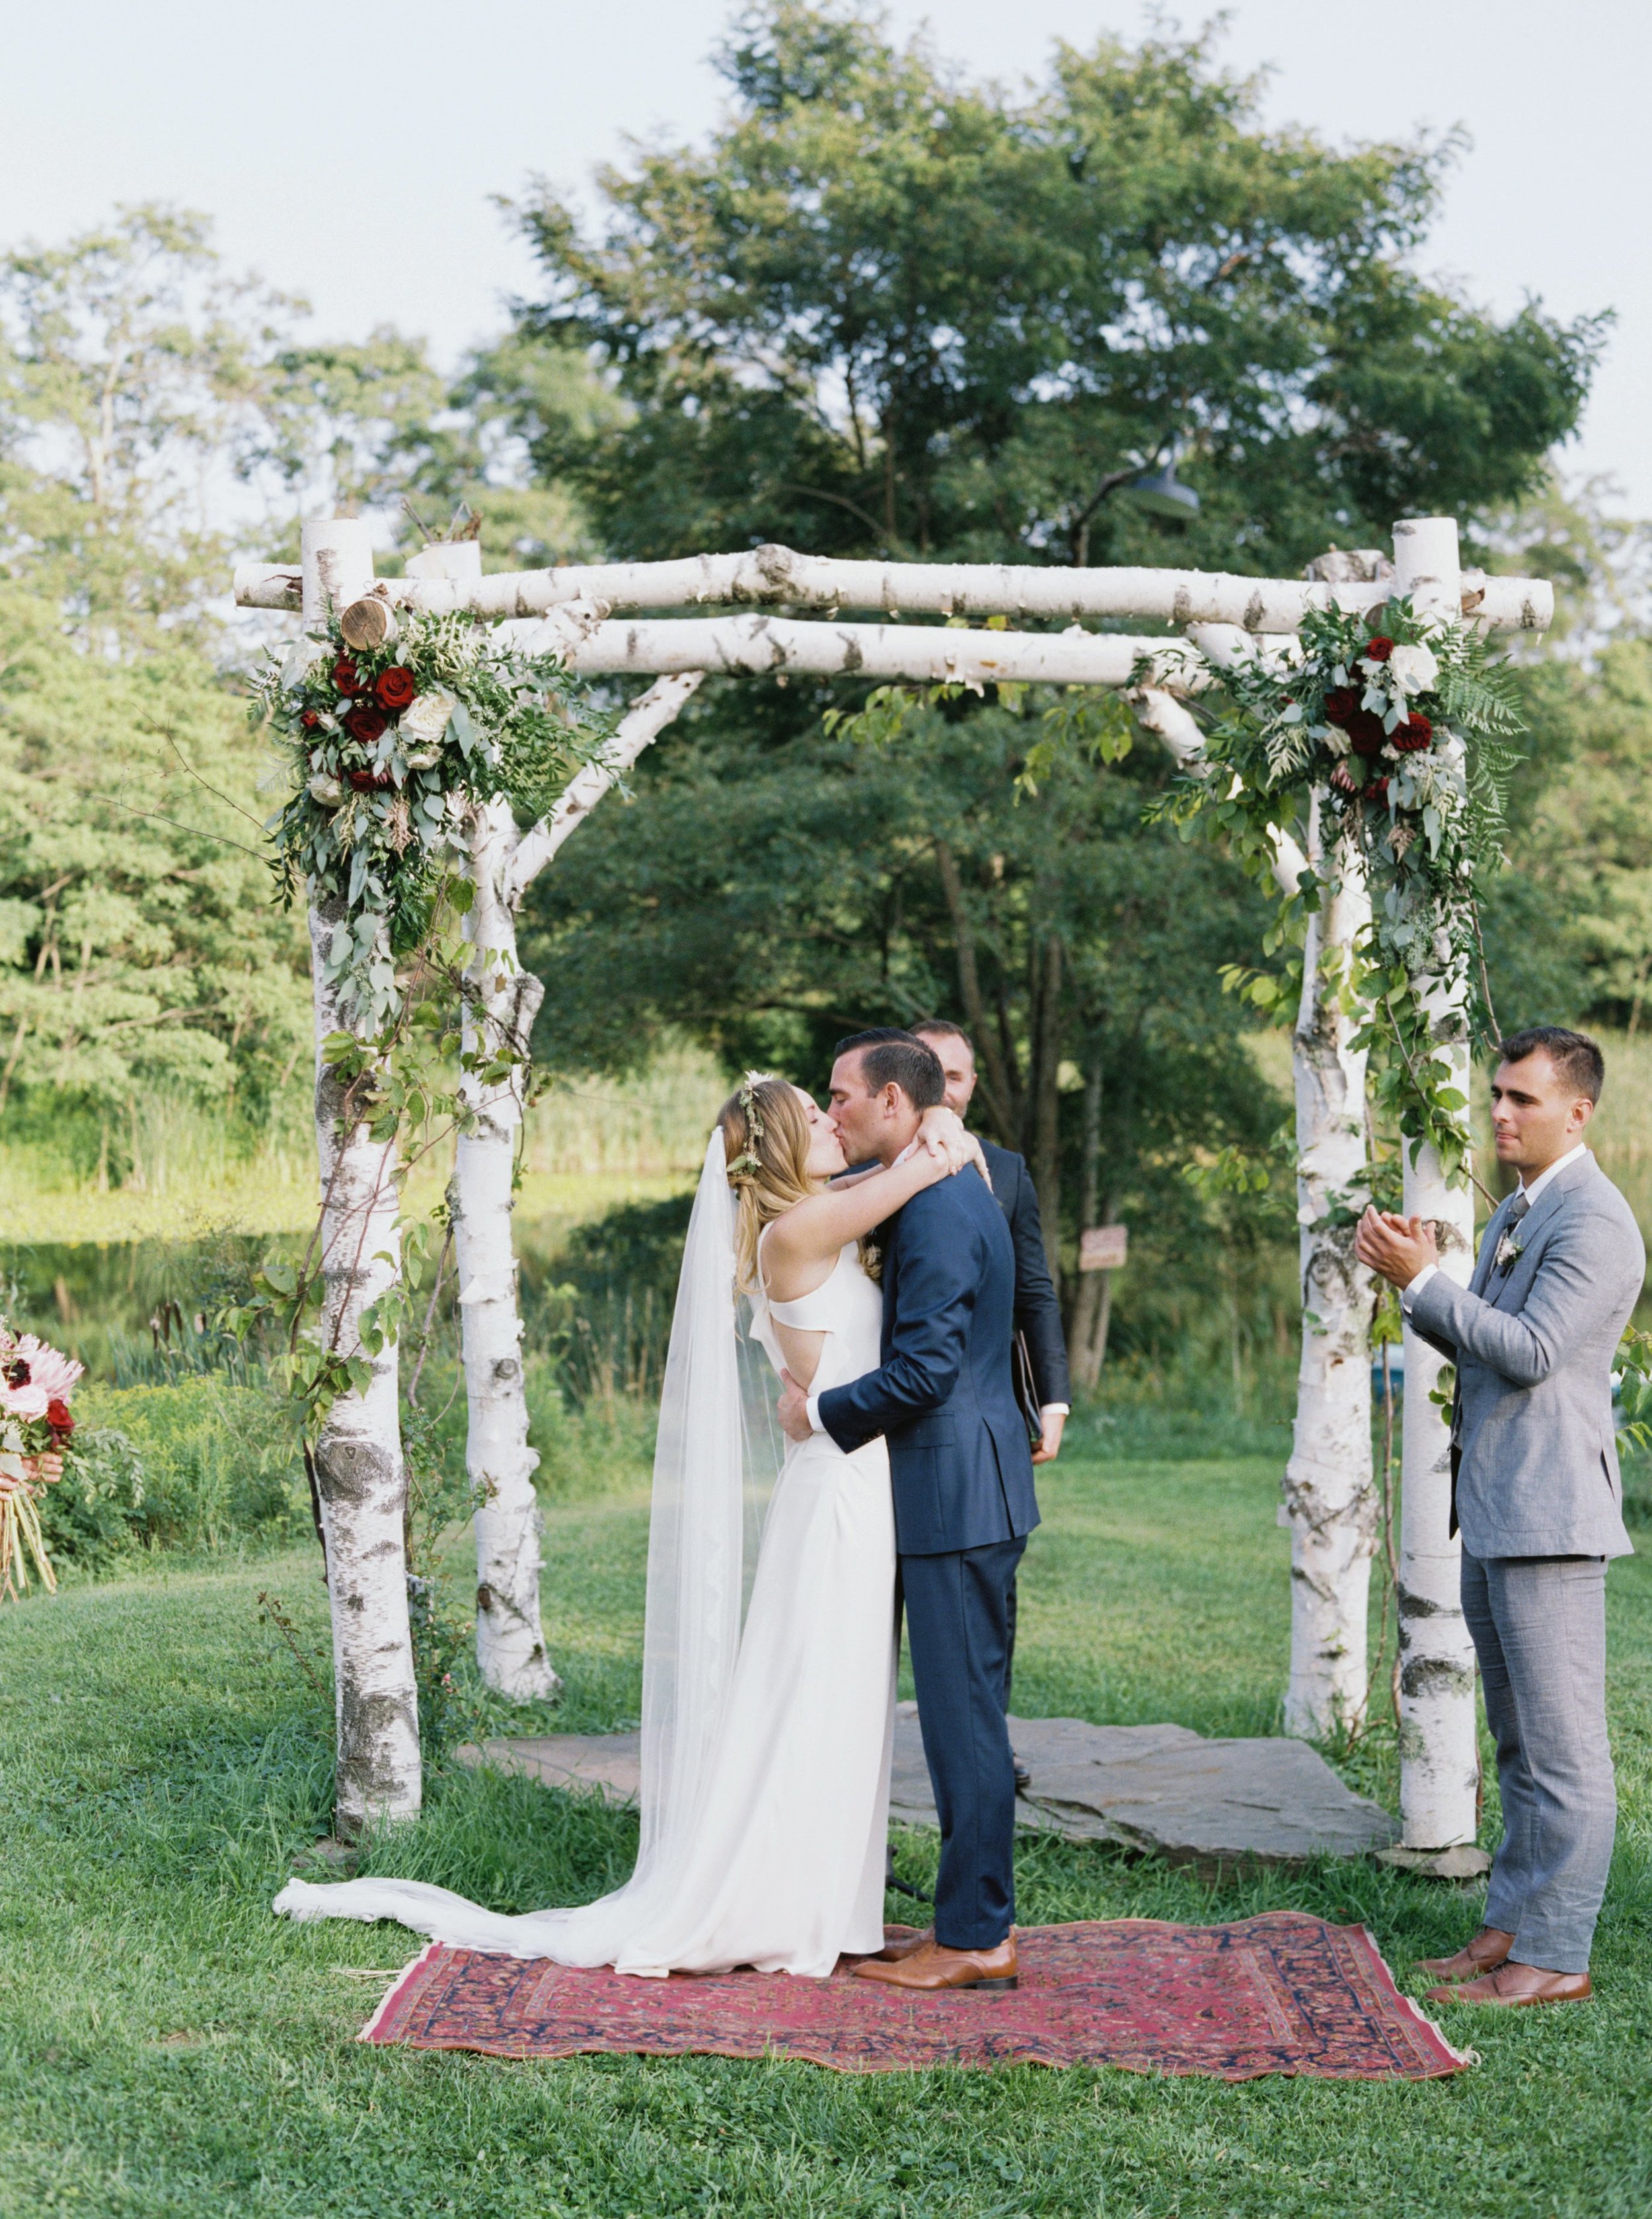 Courtney + Matt Blenheim Hill Farm Catskills NY Wedding Veronica Lola Photography 2017-423.jpg